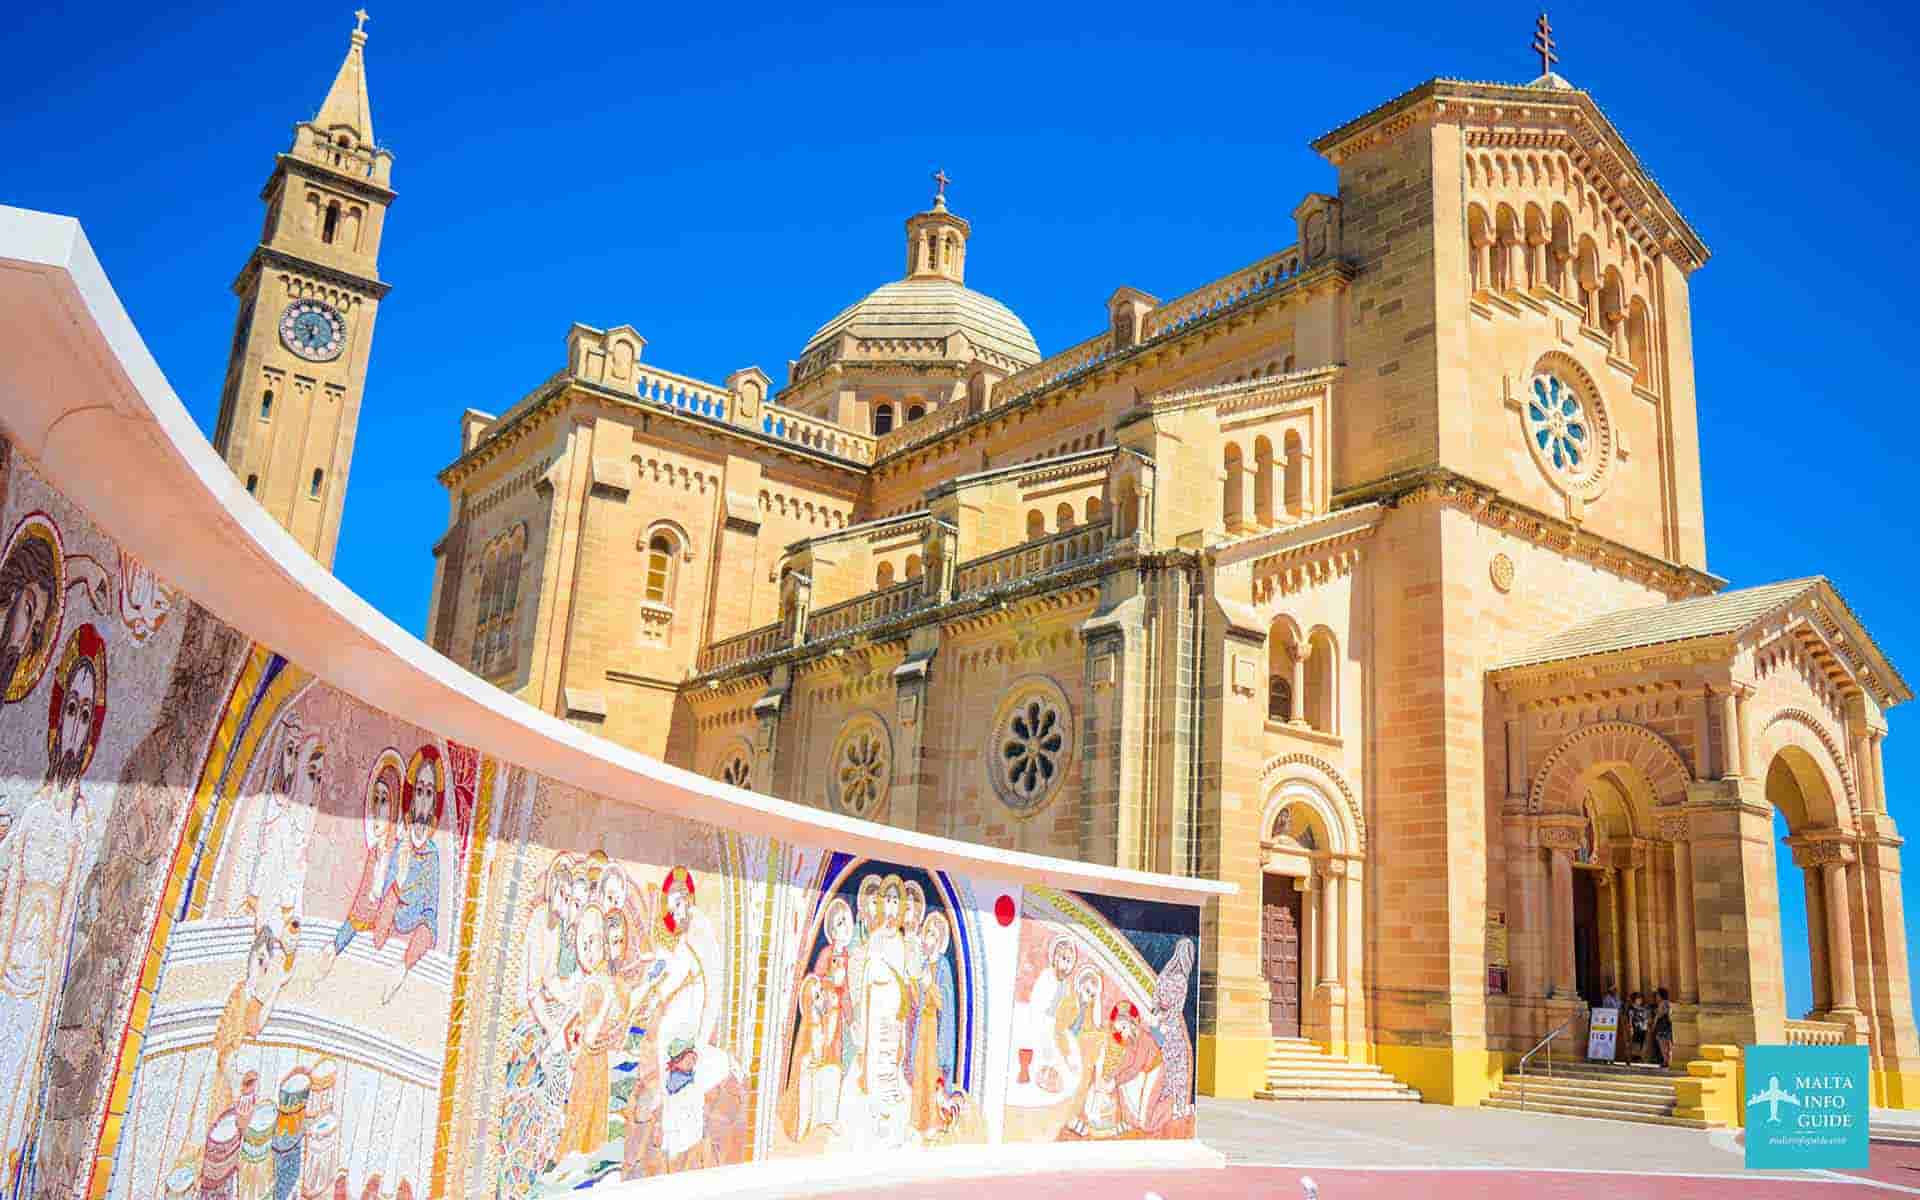 The most popular church Ta' Pinu shining bright at Gozo.